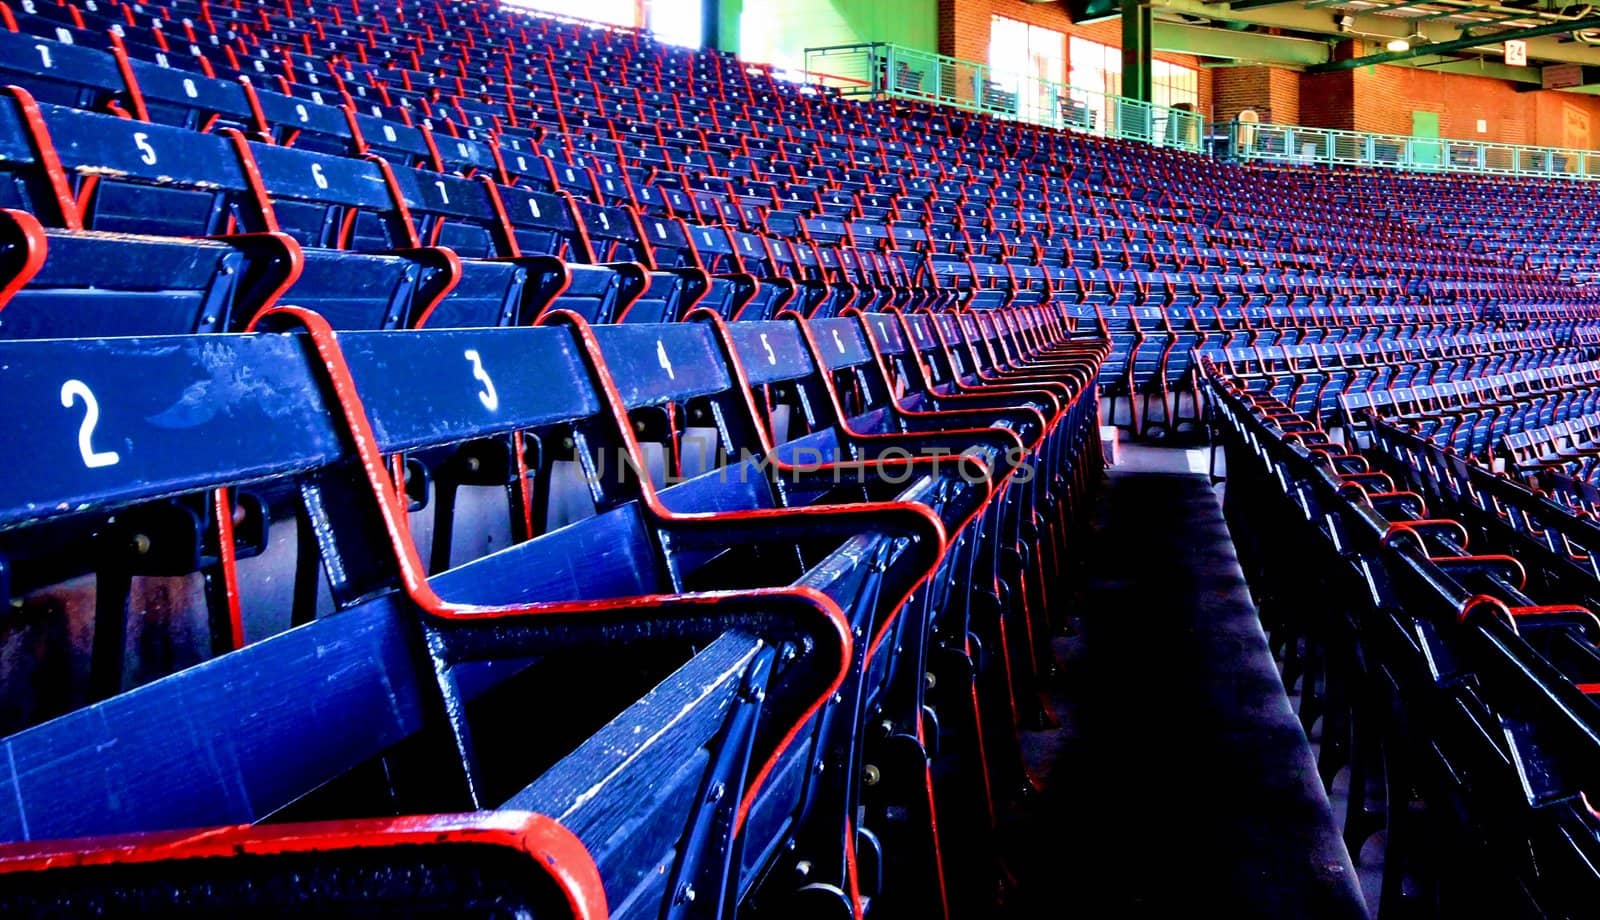 Part of the original blue seats at Fenway Park